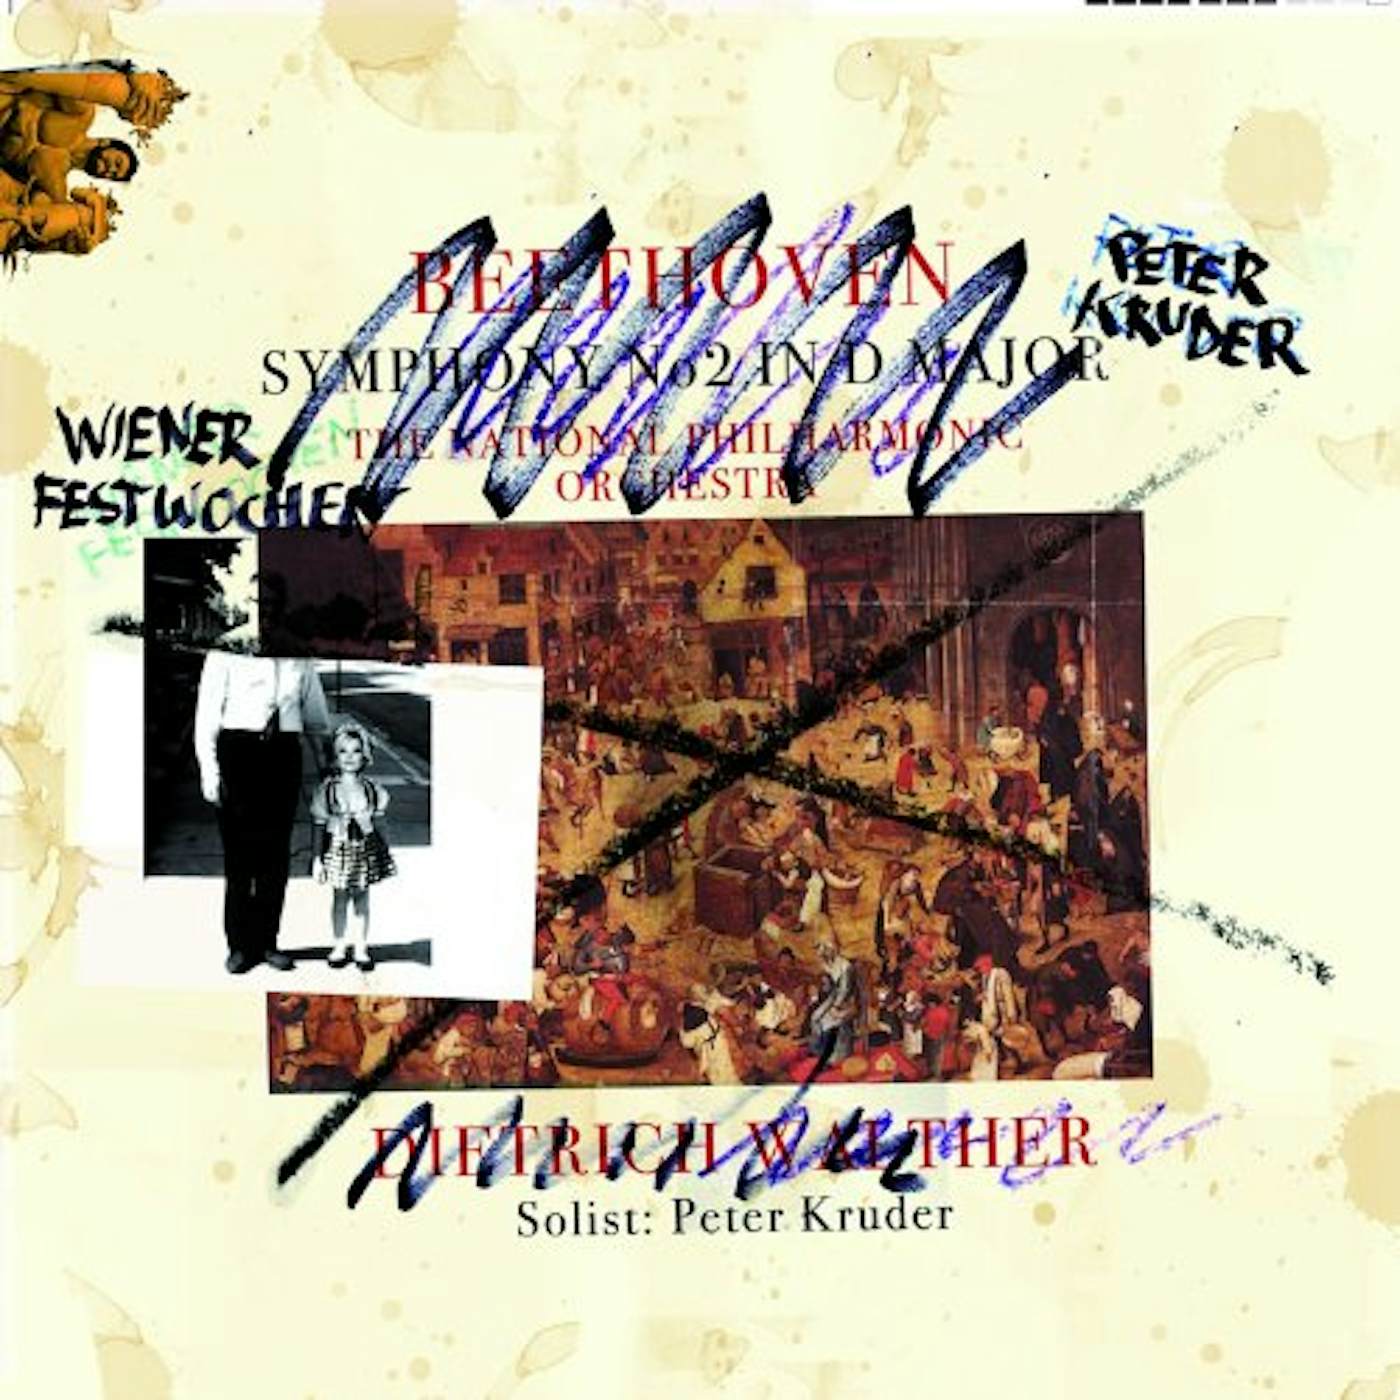 Peter Kruder Die Wiener Festwochen Vinyl Record